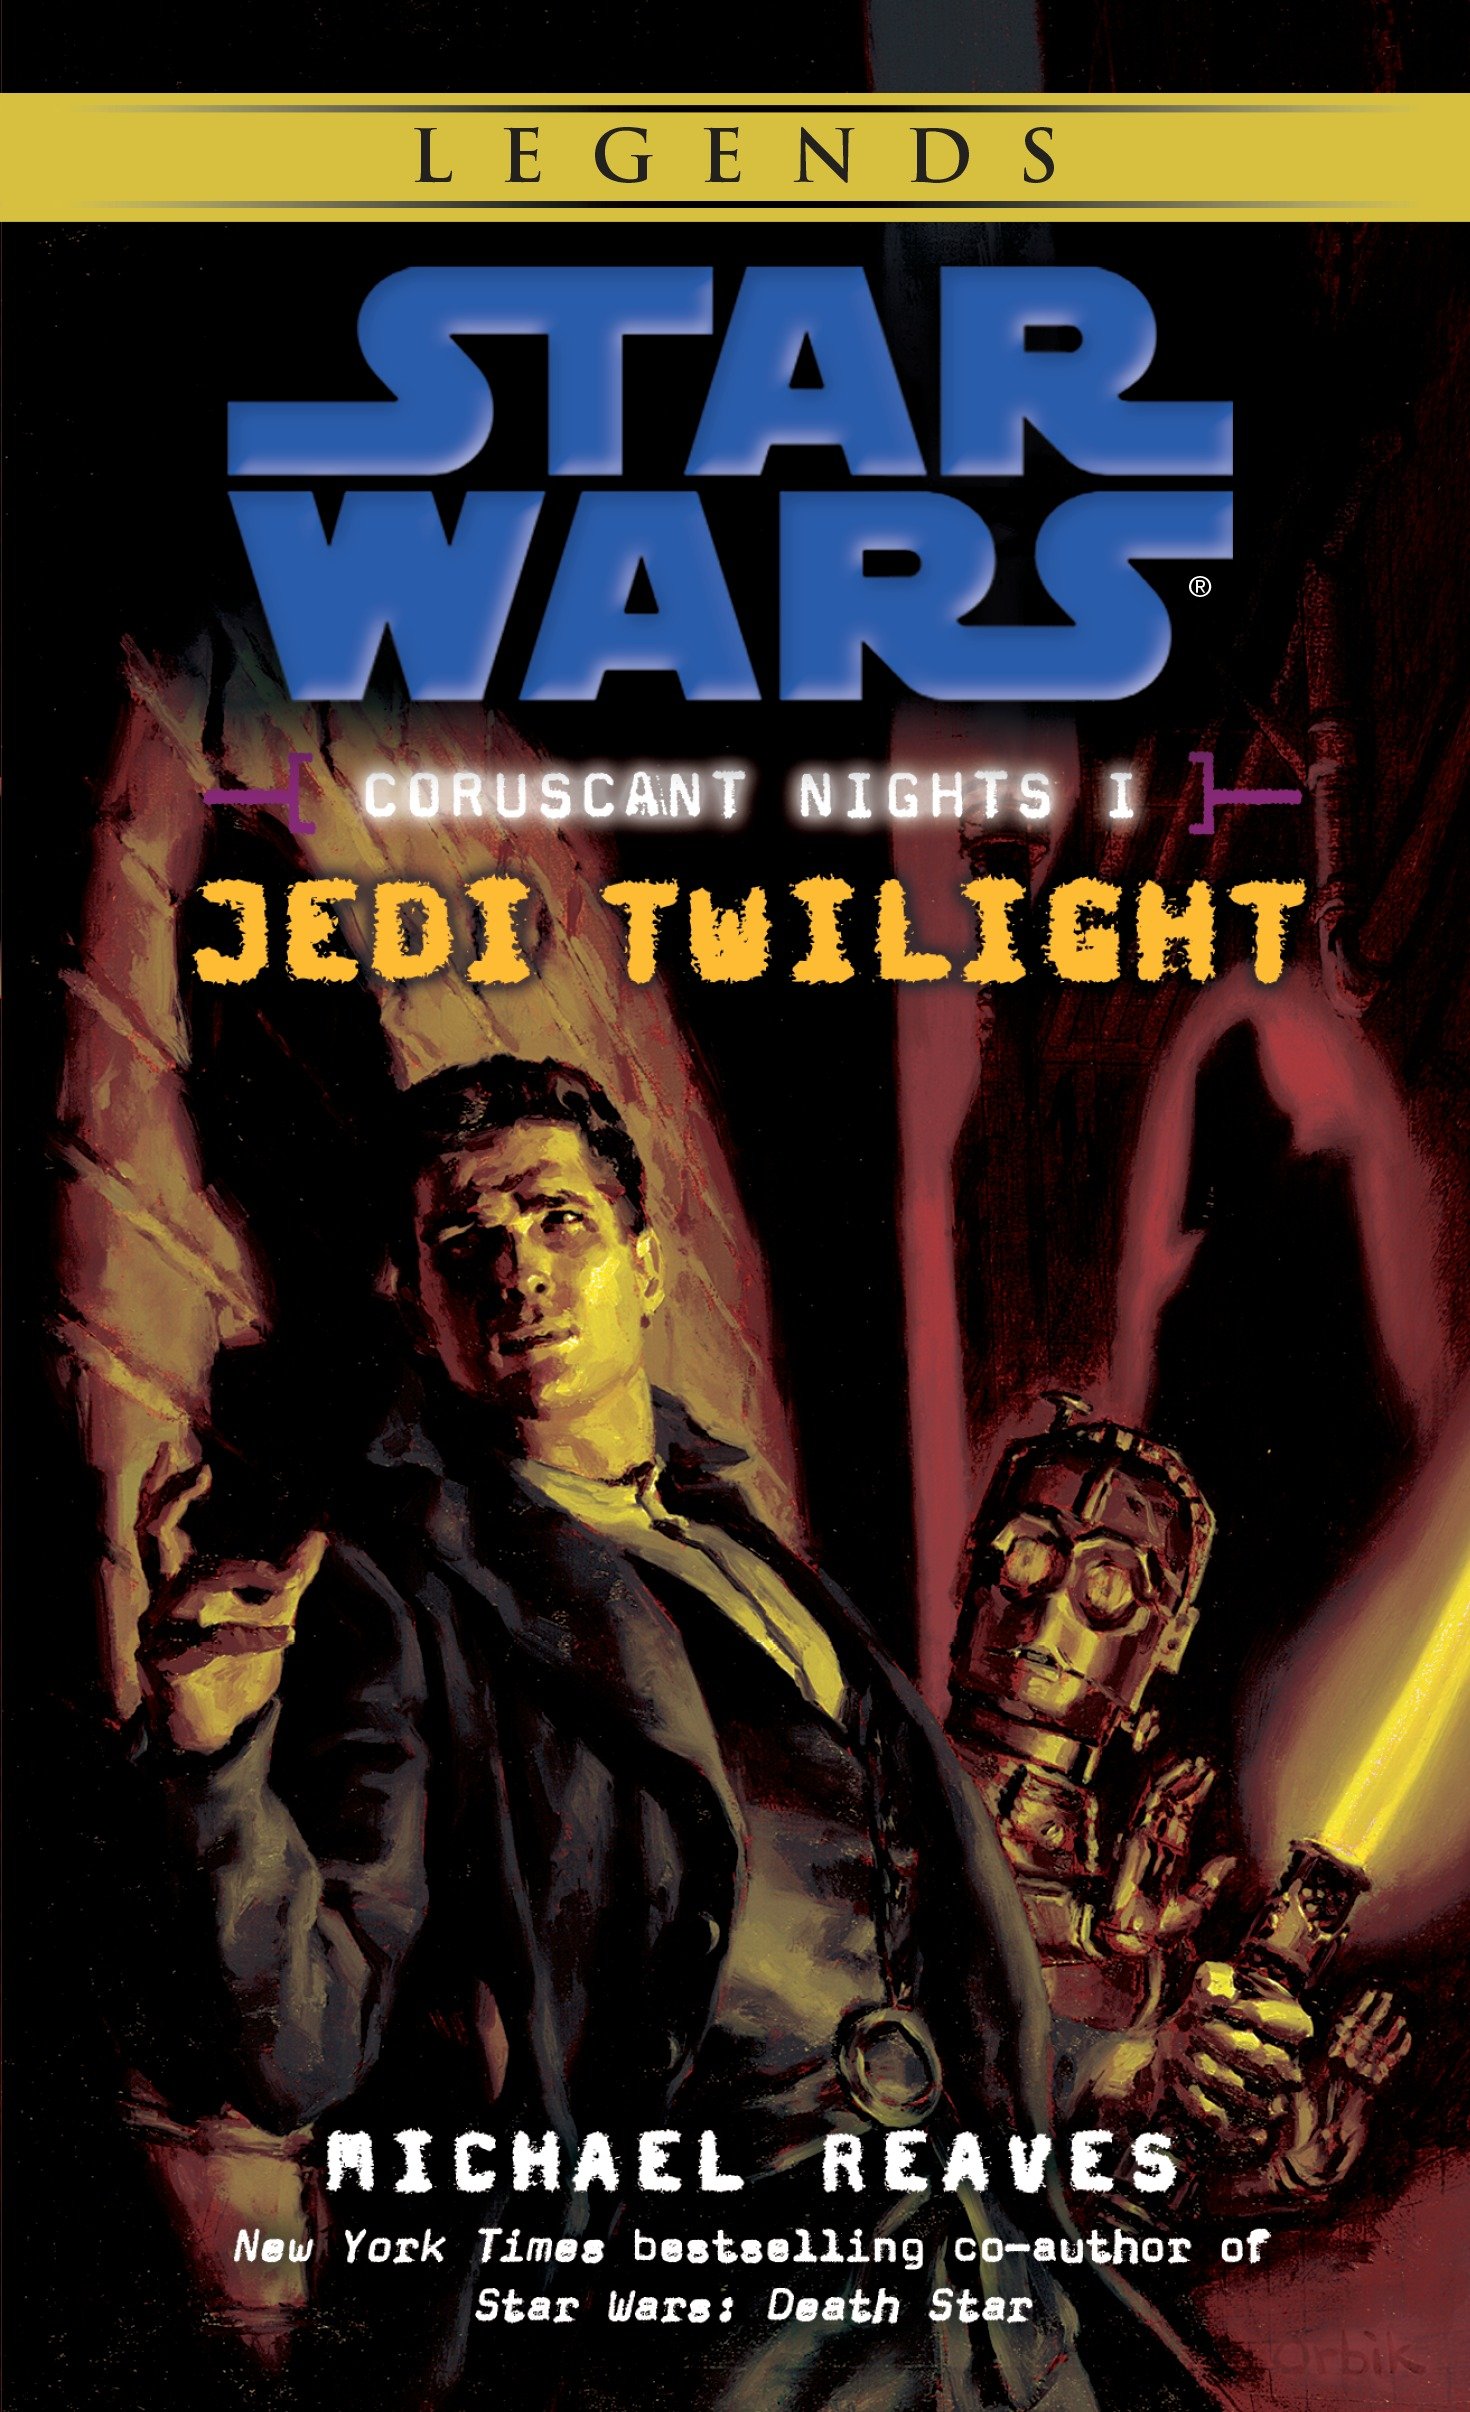 Star Wars Coruscant Nights Paperback (Small) Volume 1 Jedi Twilight